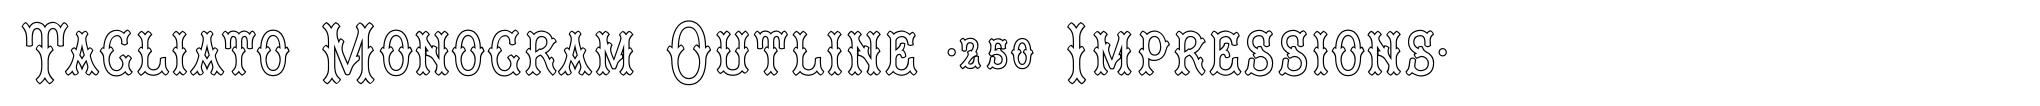 Tagliato Monogram Outline (250 Impressions) image